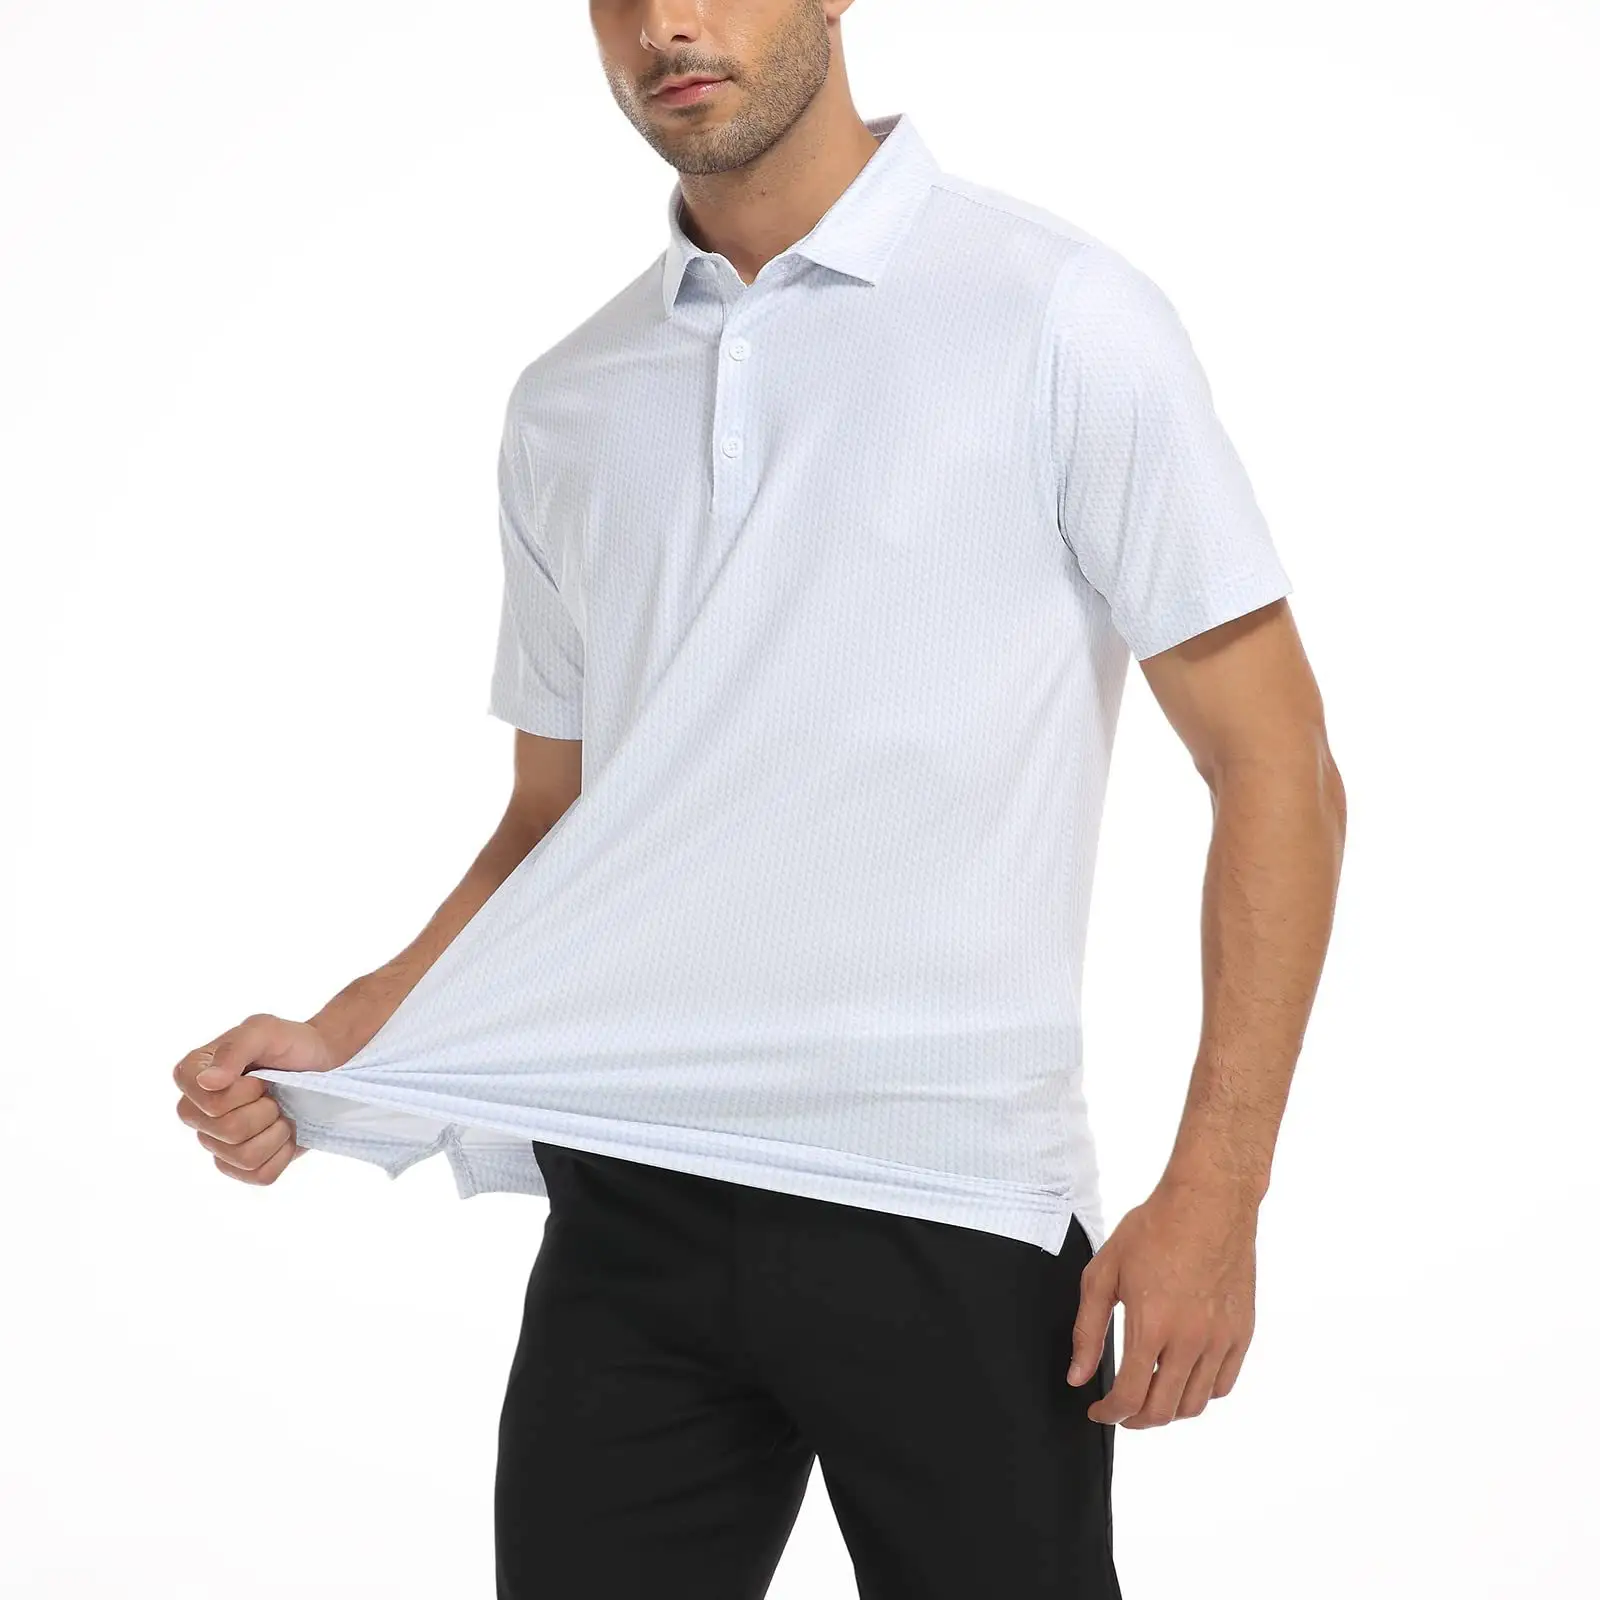 Camisetas polo com estampa de logotipo de marca personalizada, camisas polo masculinas de alta qualidade 100 algodão com estampa de lapela, camisetas/